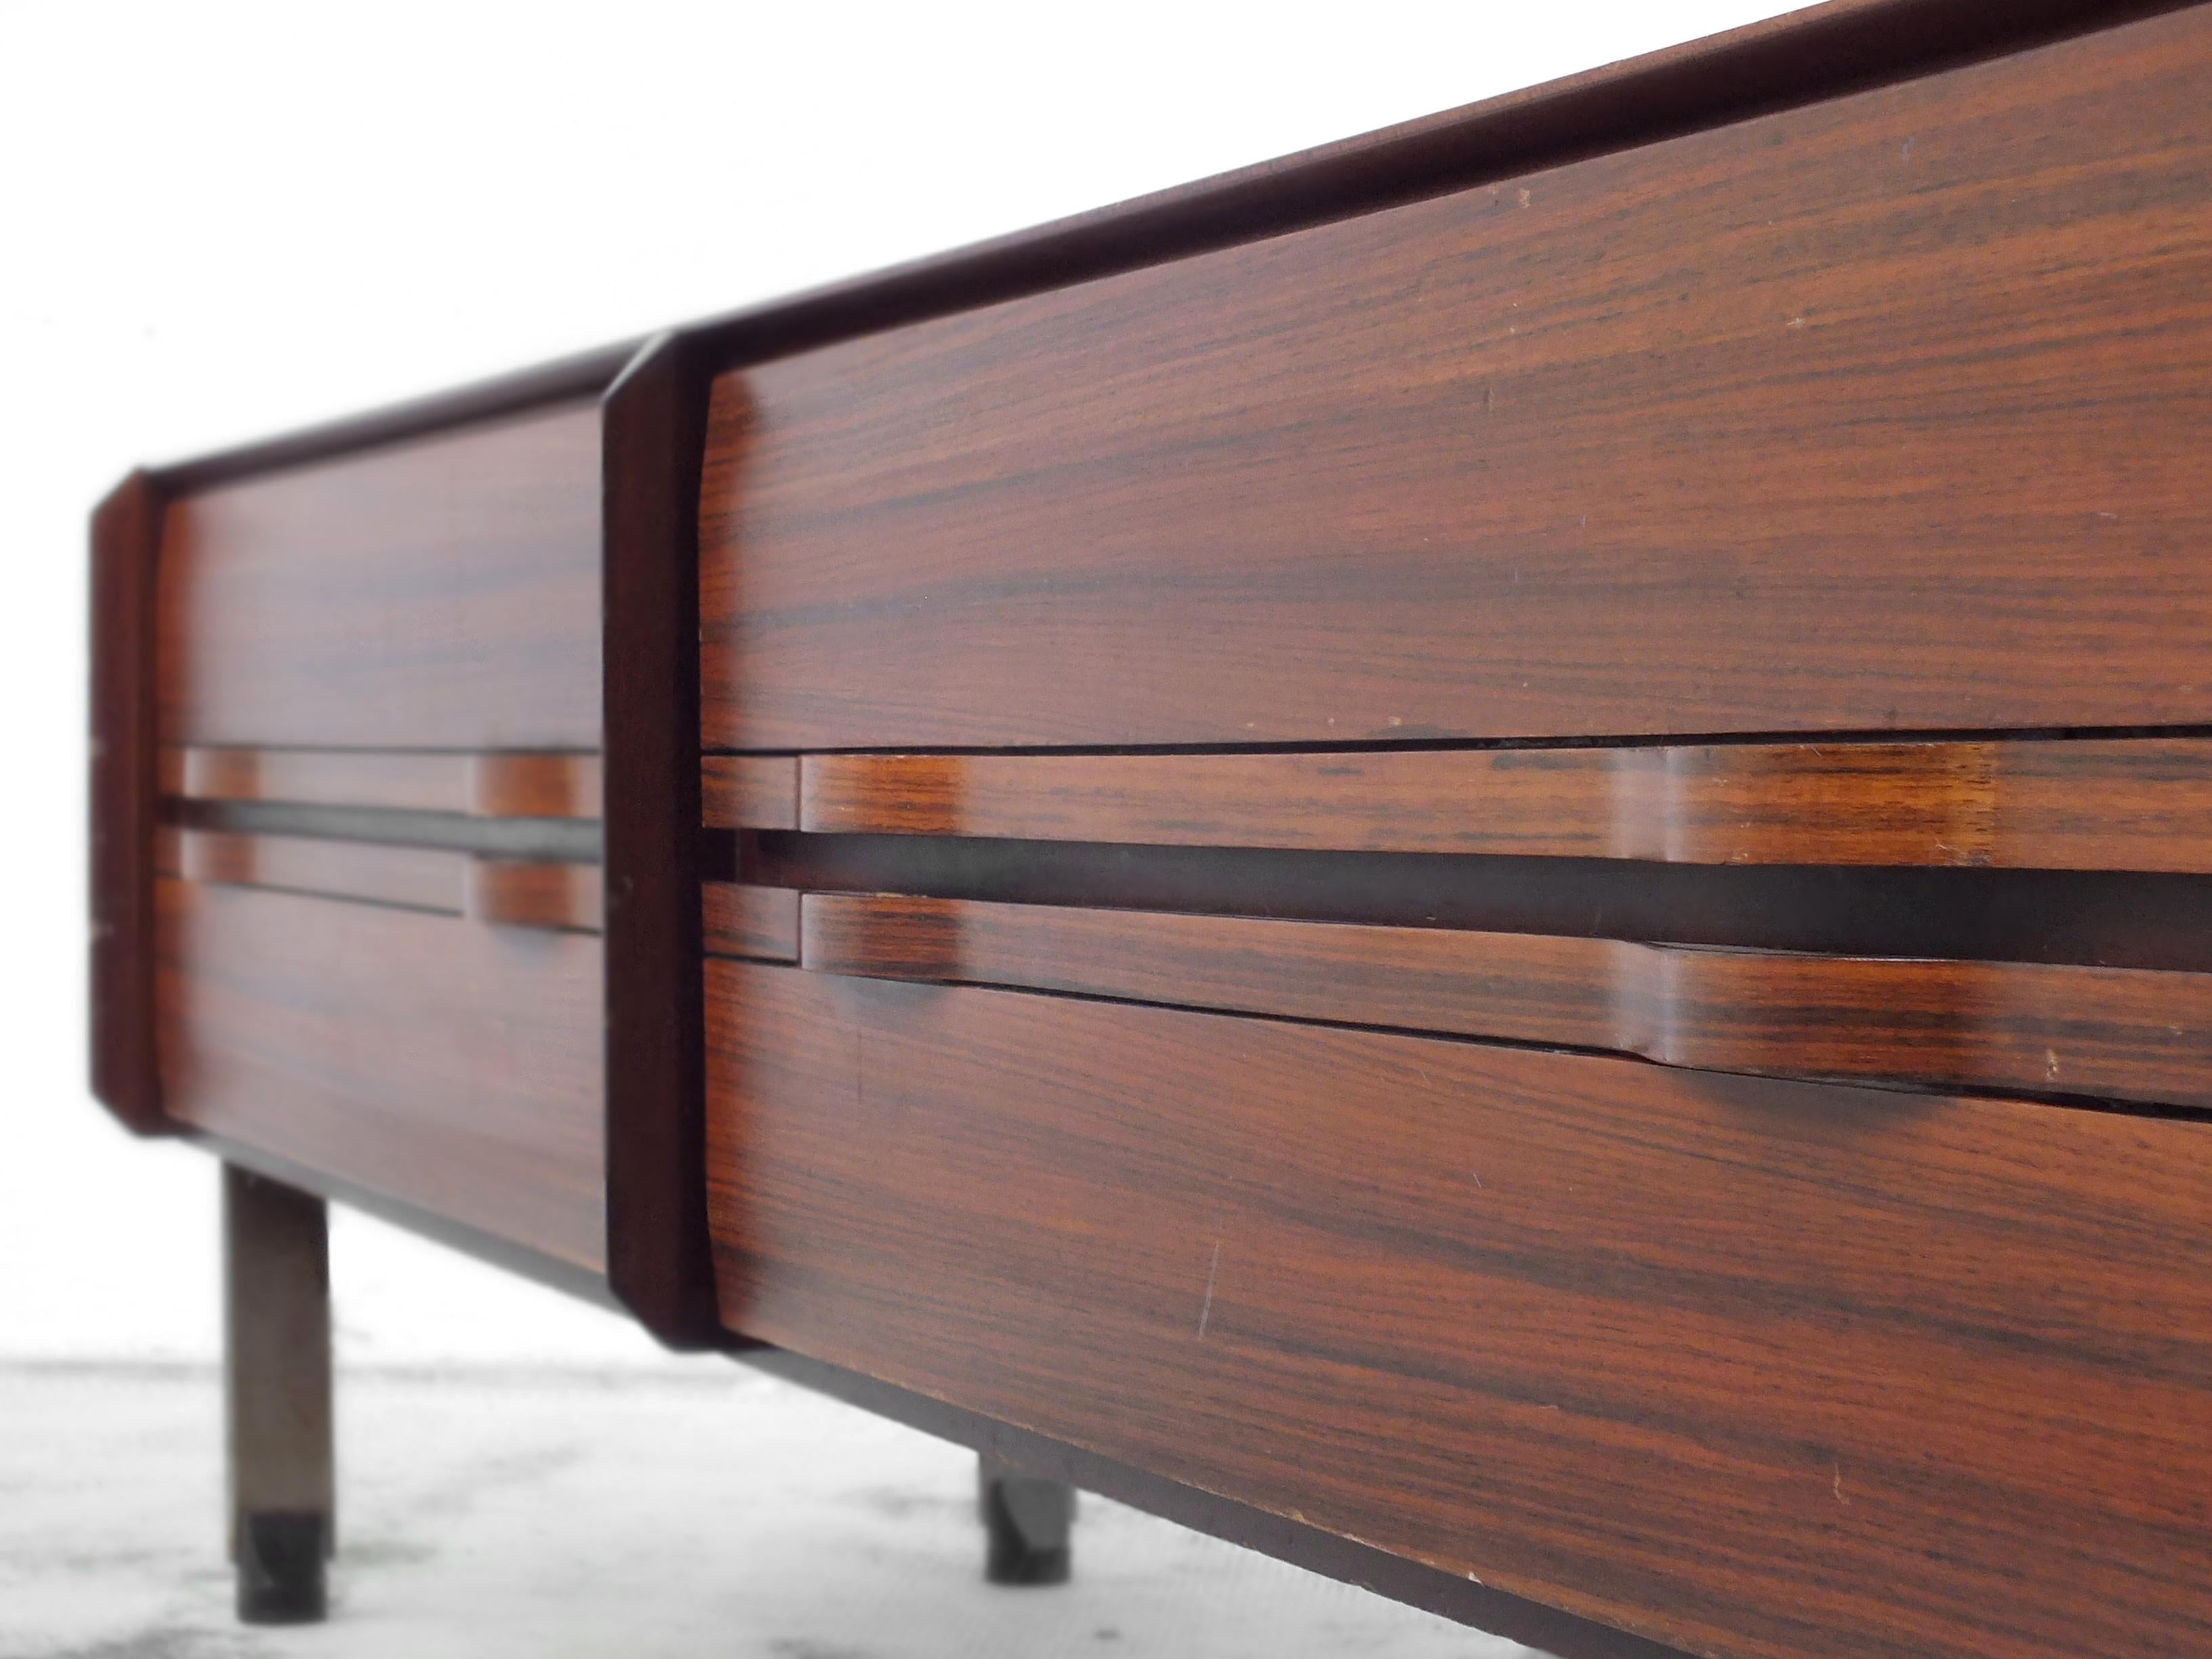 La Permanente meuble Cantu' Italy minimalist sideboard probable Frattini design  For Sale 2